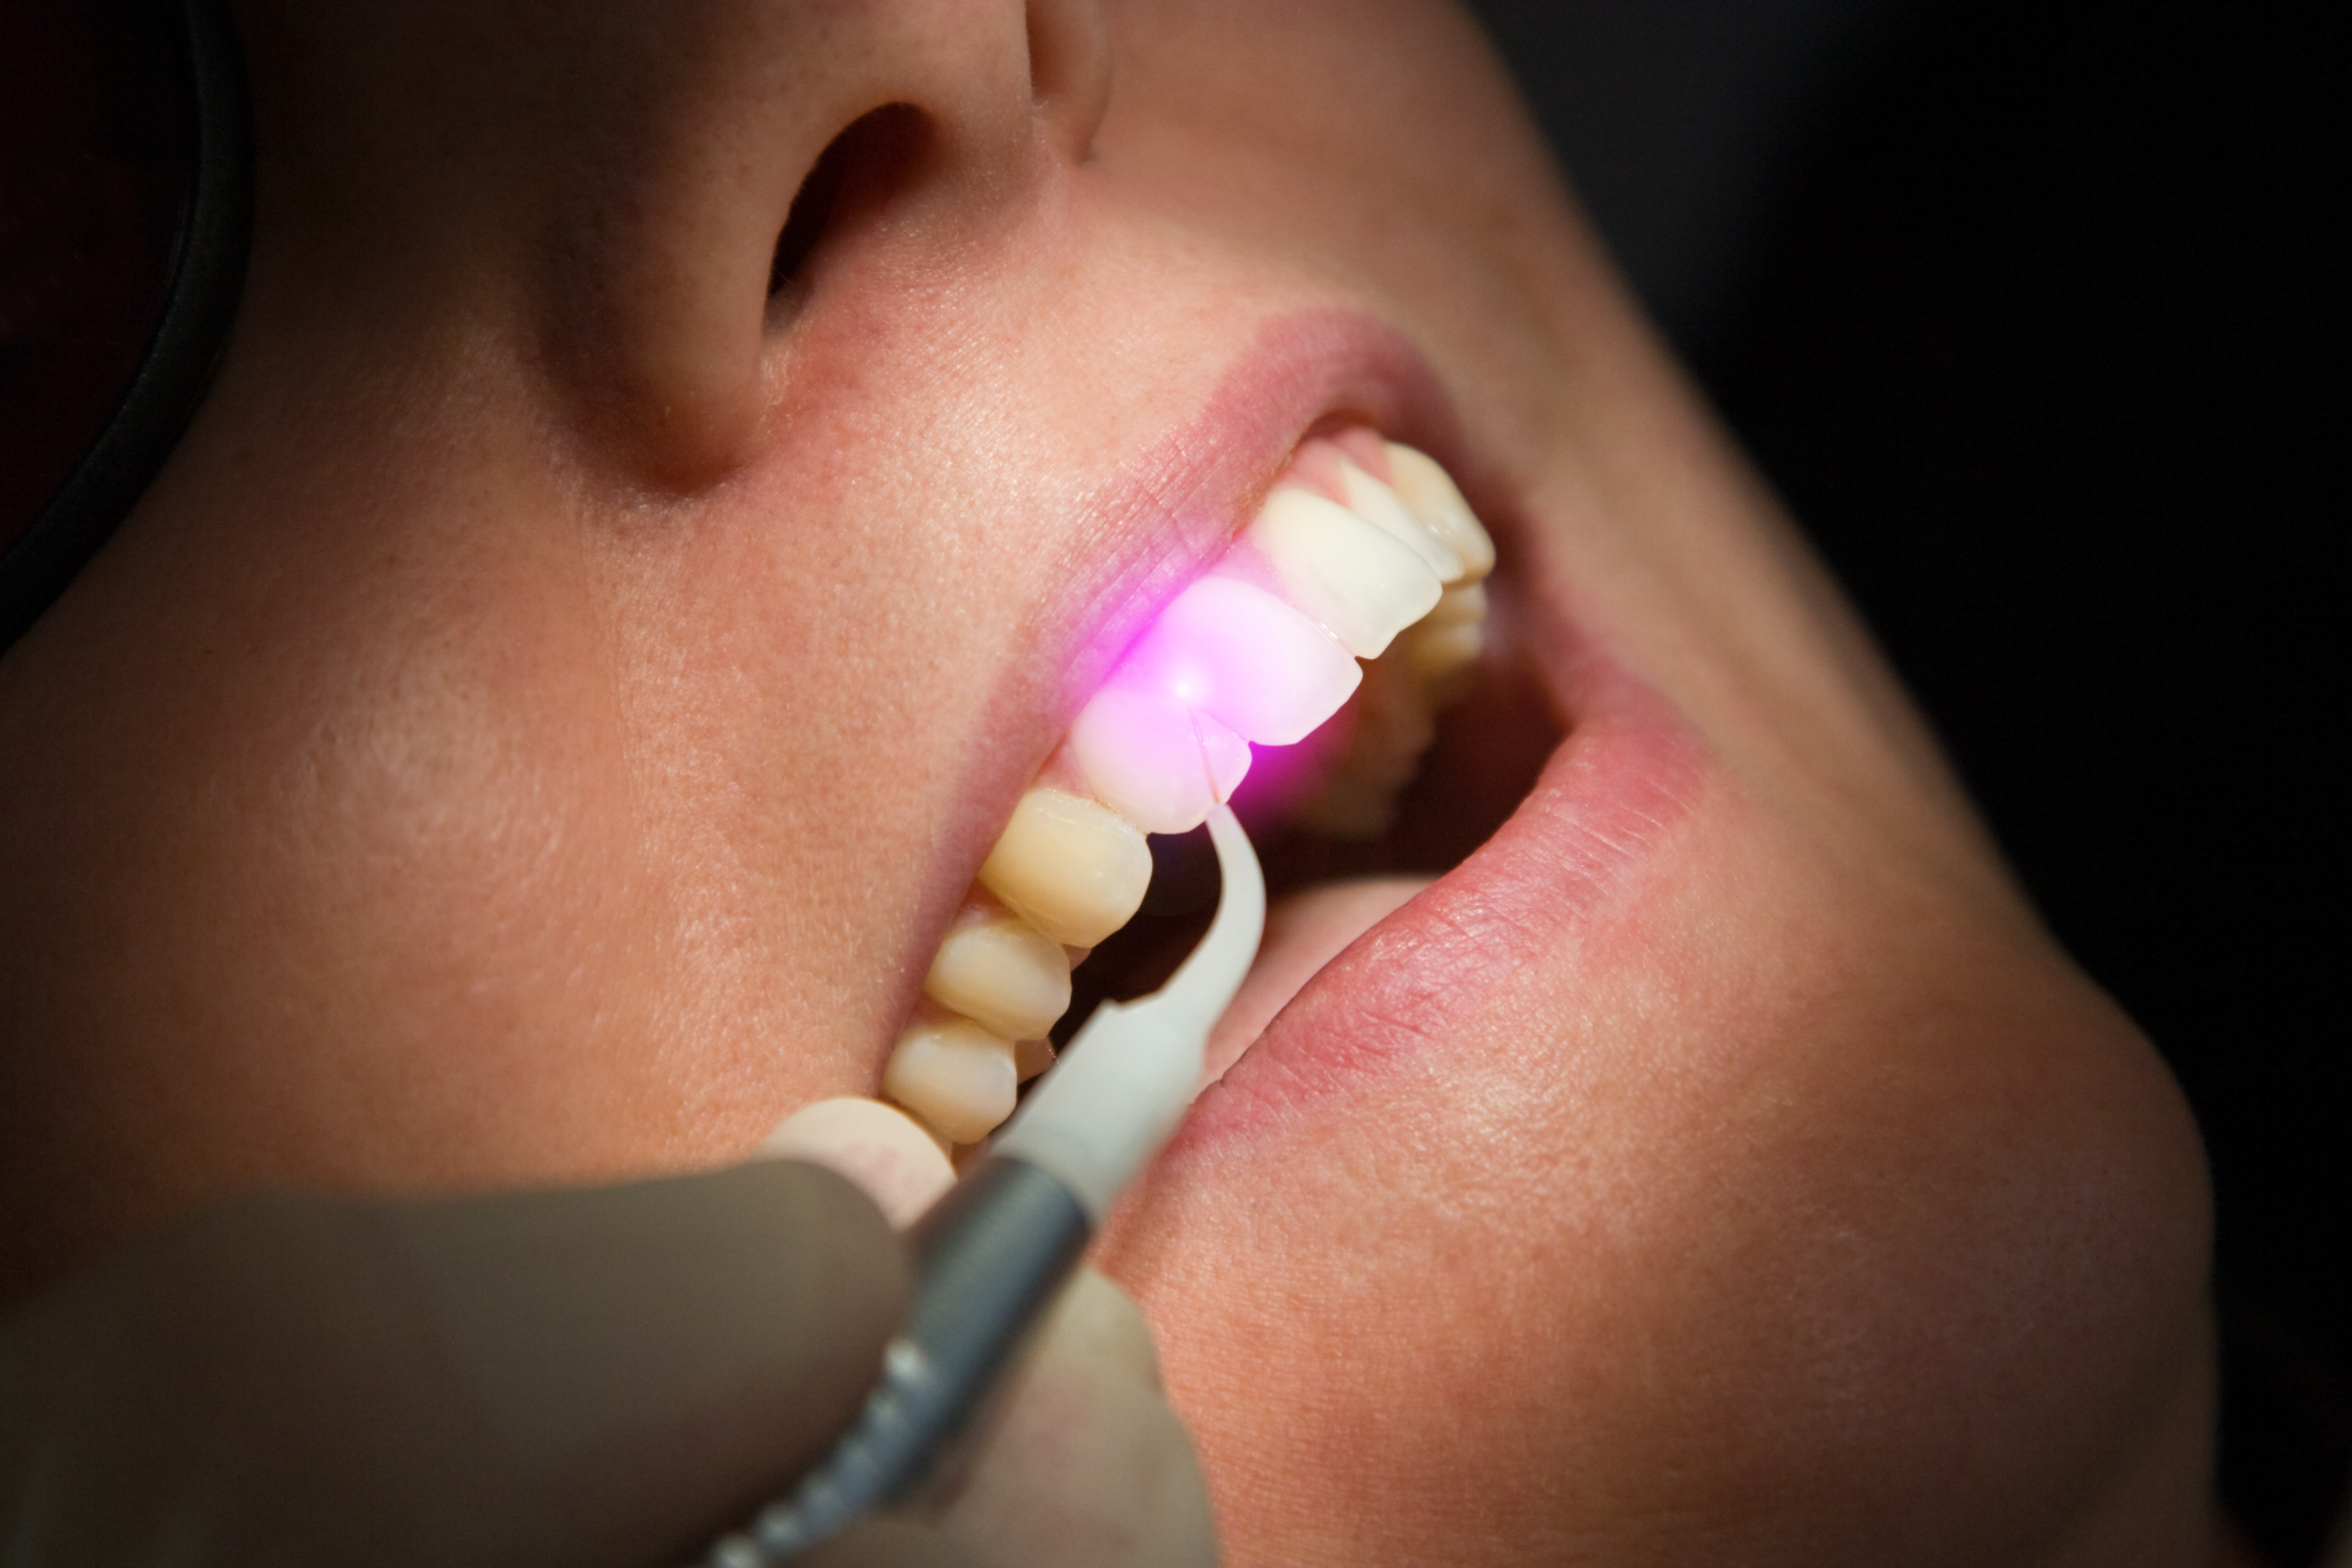 Dental Lasers